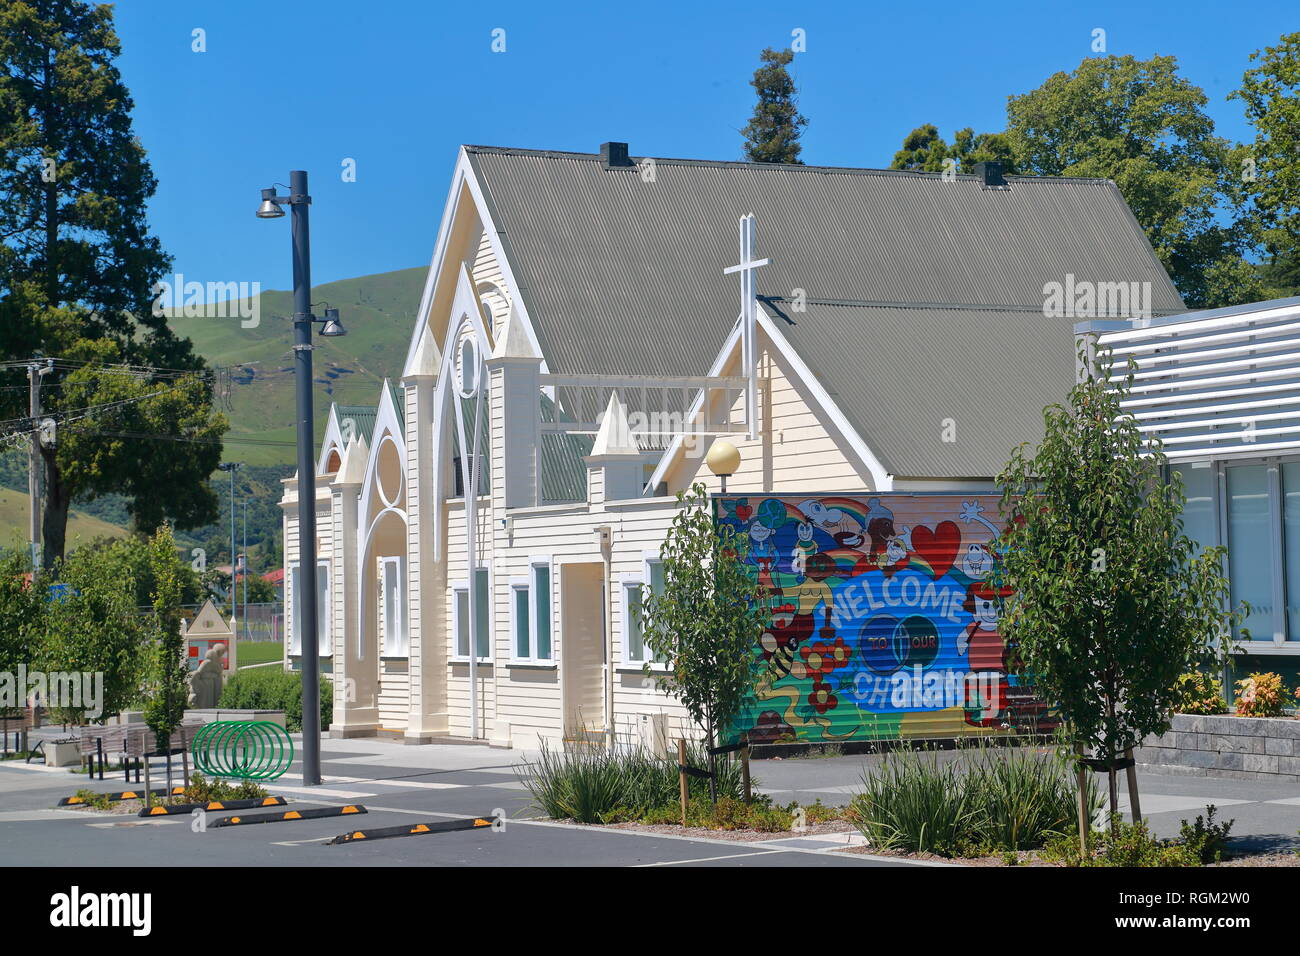 Colourful mural welcomes visitors to Paeroa Co-Operating Church, Paeroa, Waikato, New Zealand Stock Photo